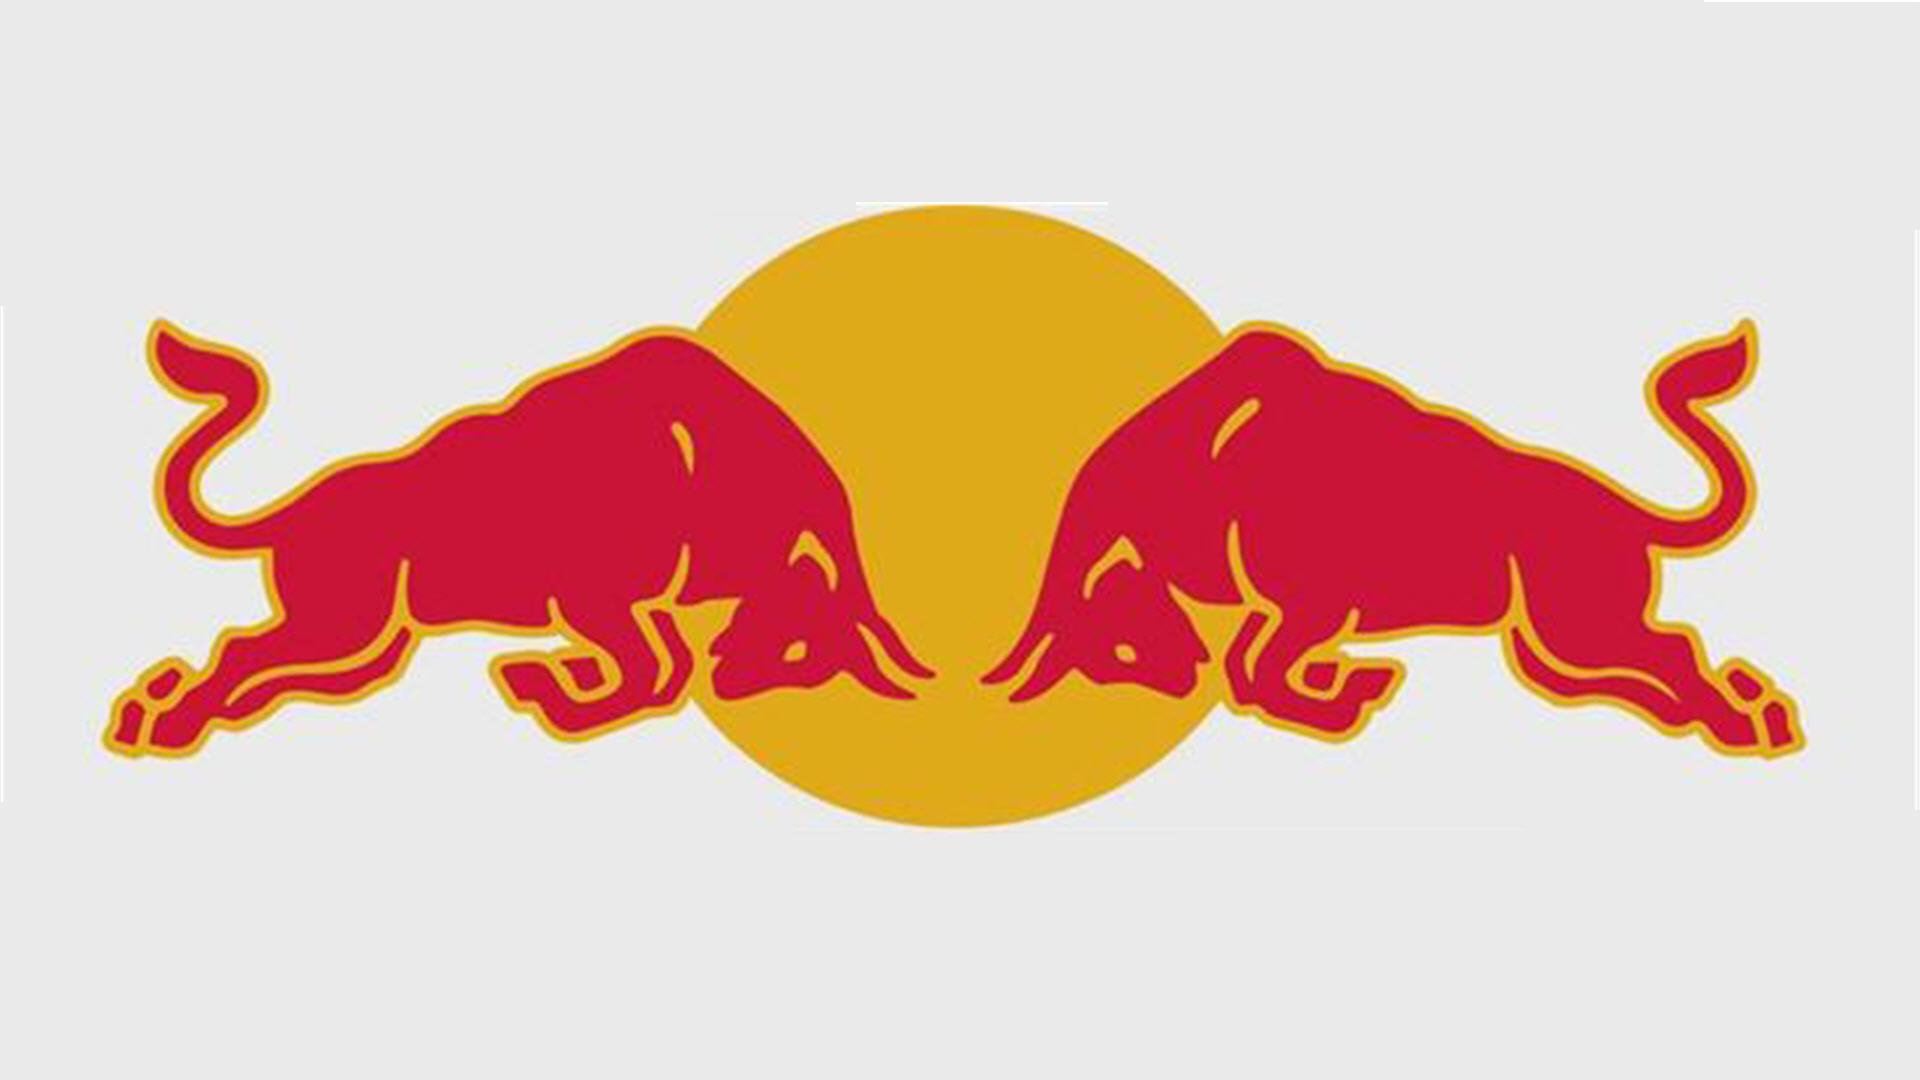 Red Bull Logo - 1000 pics